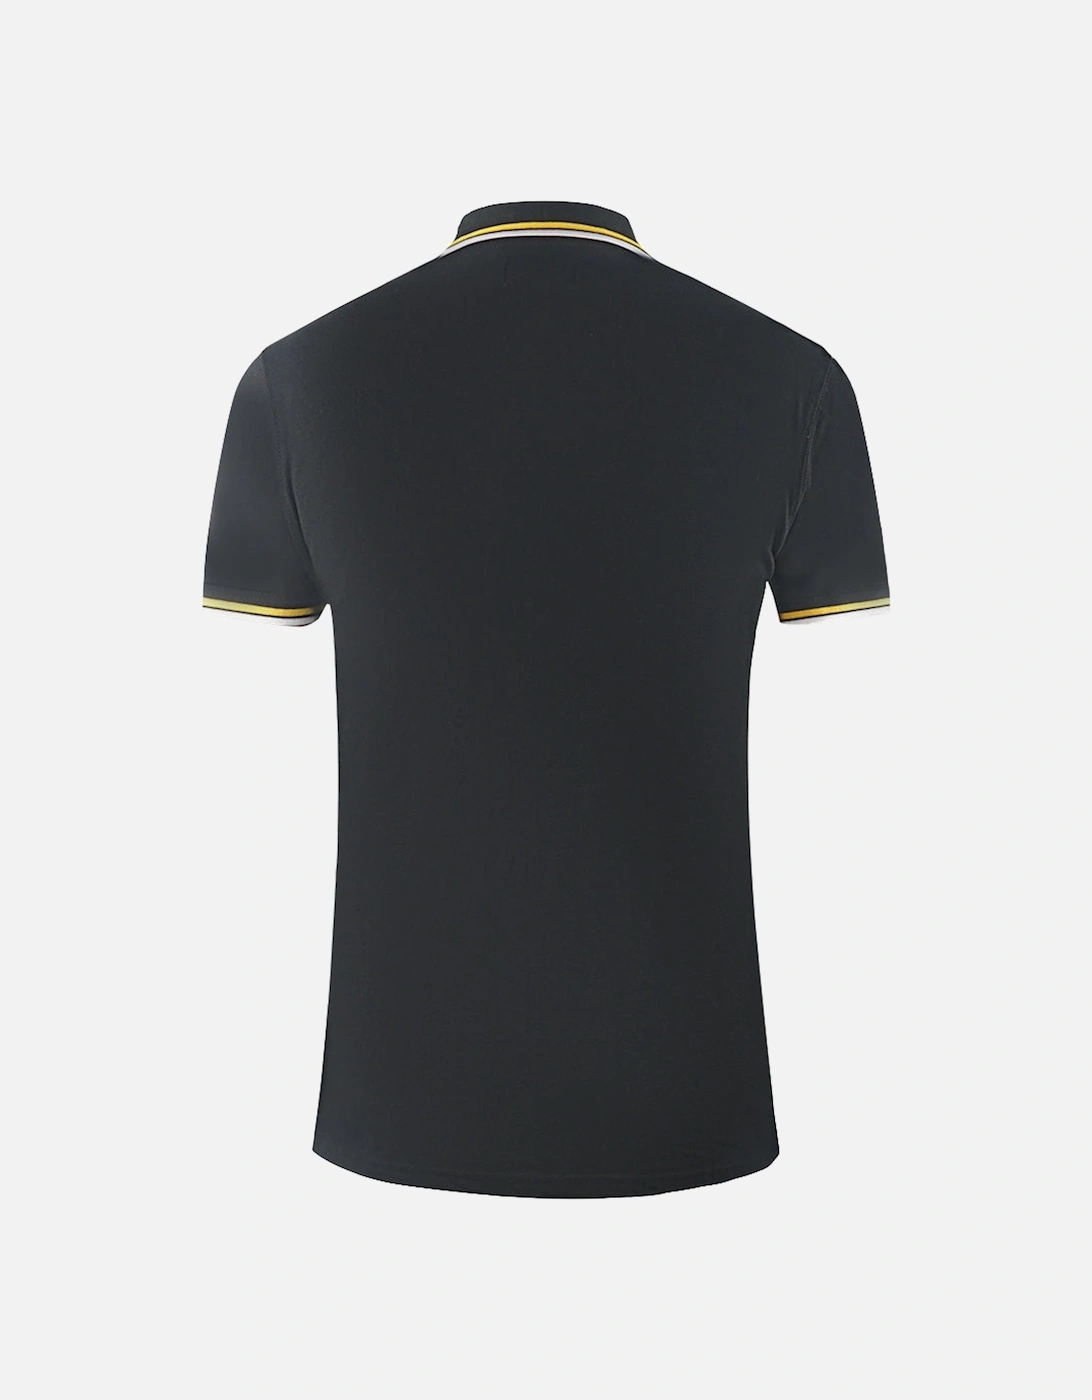 Twin Tipped Collar Brand Logo Black Polo Shirt